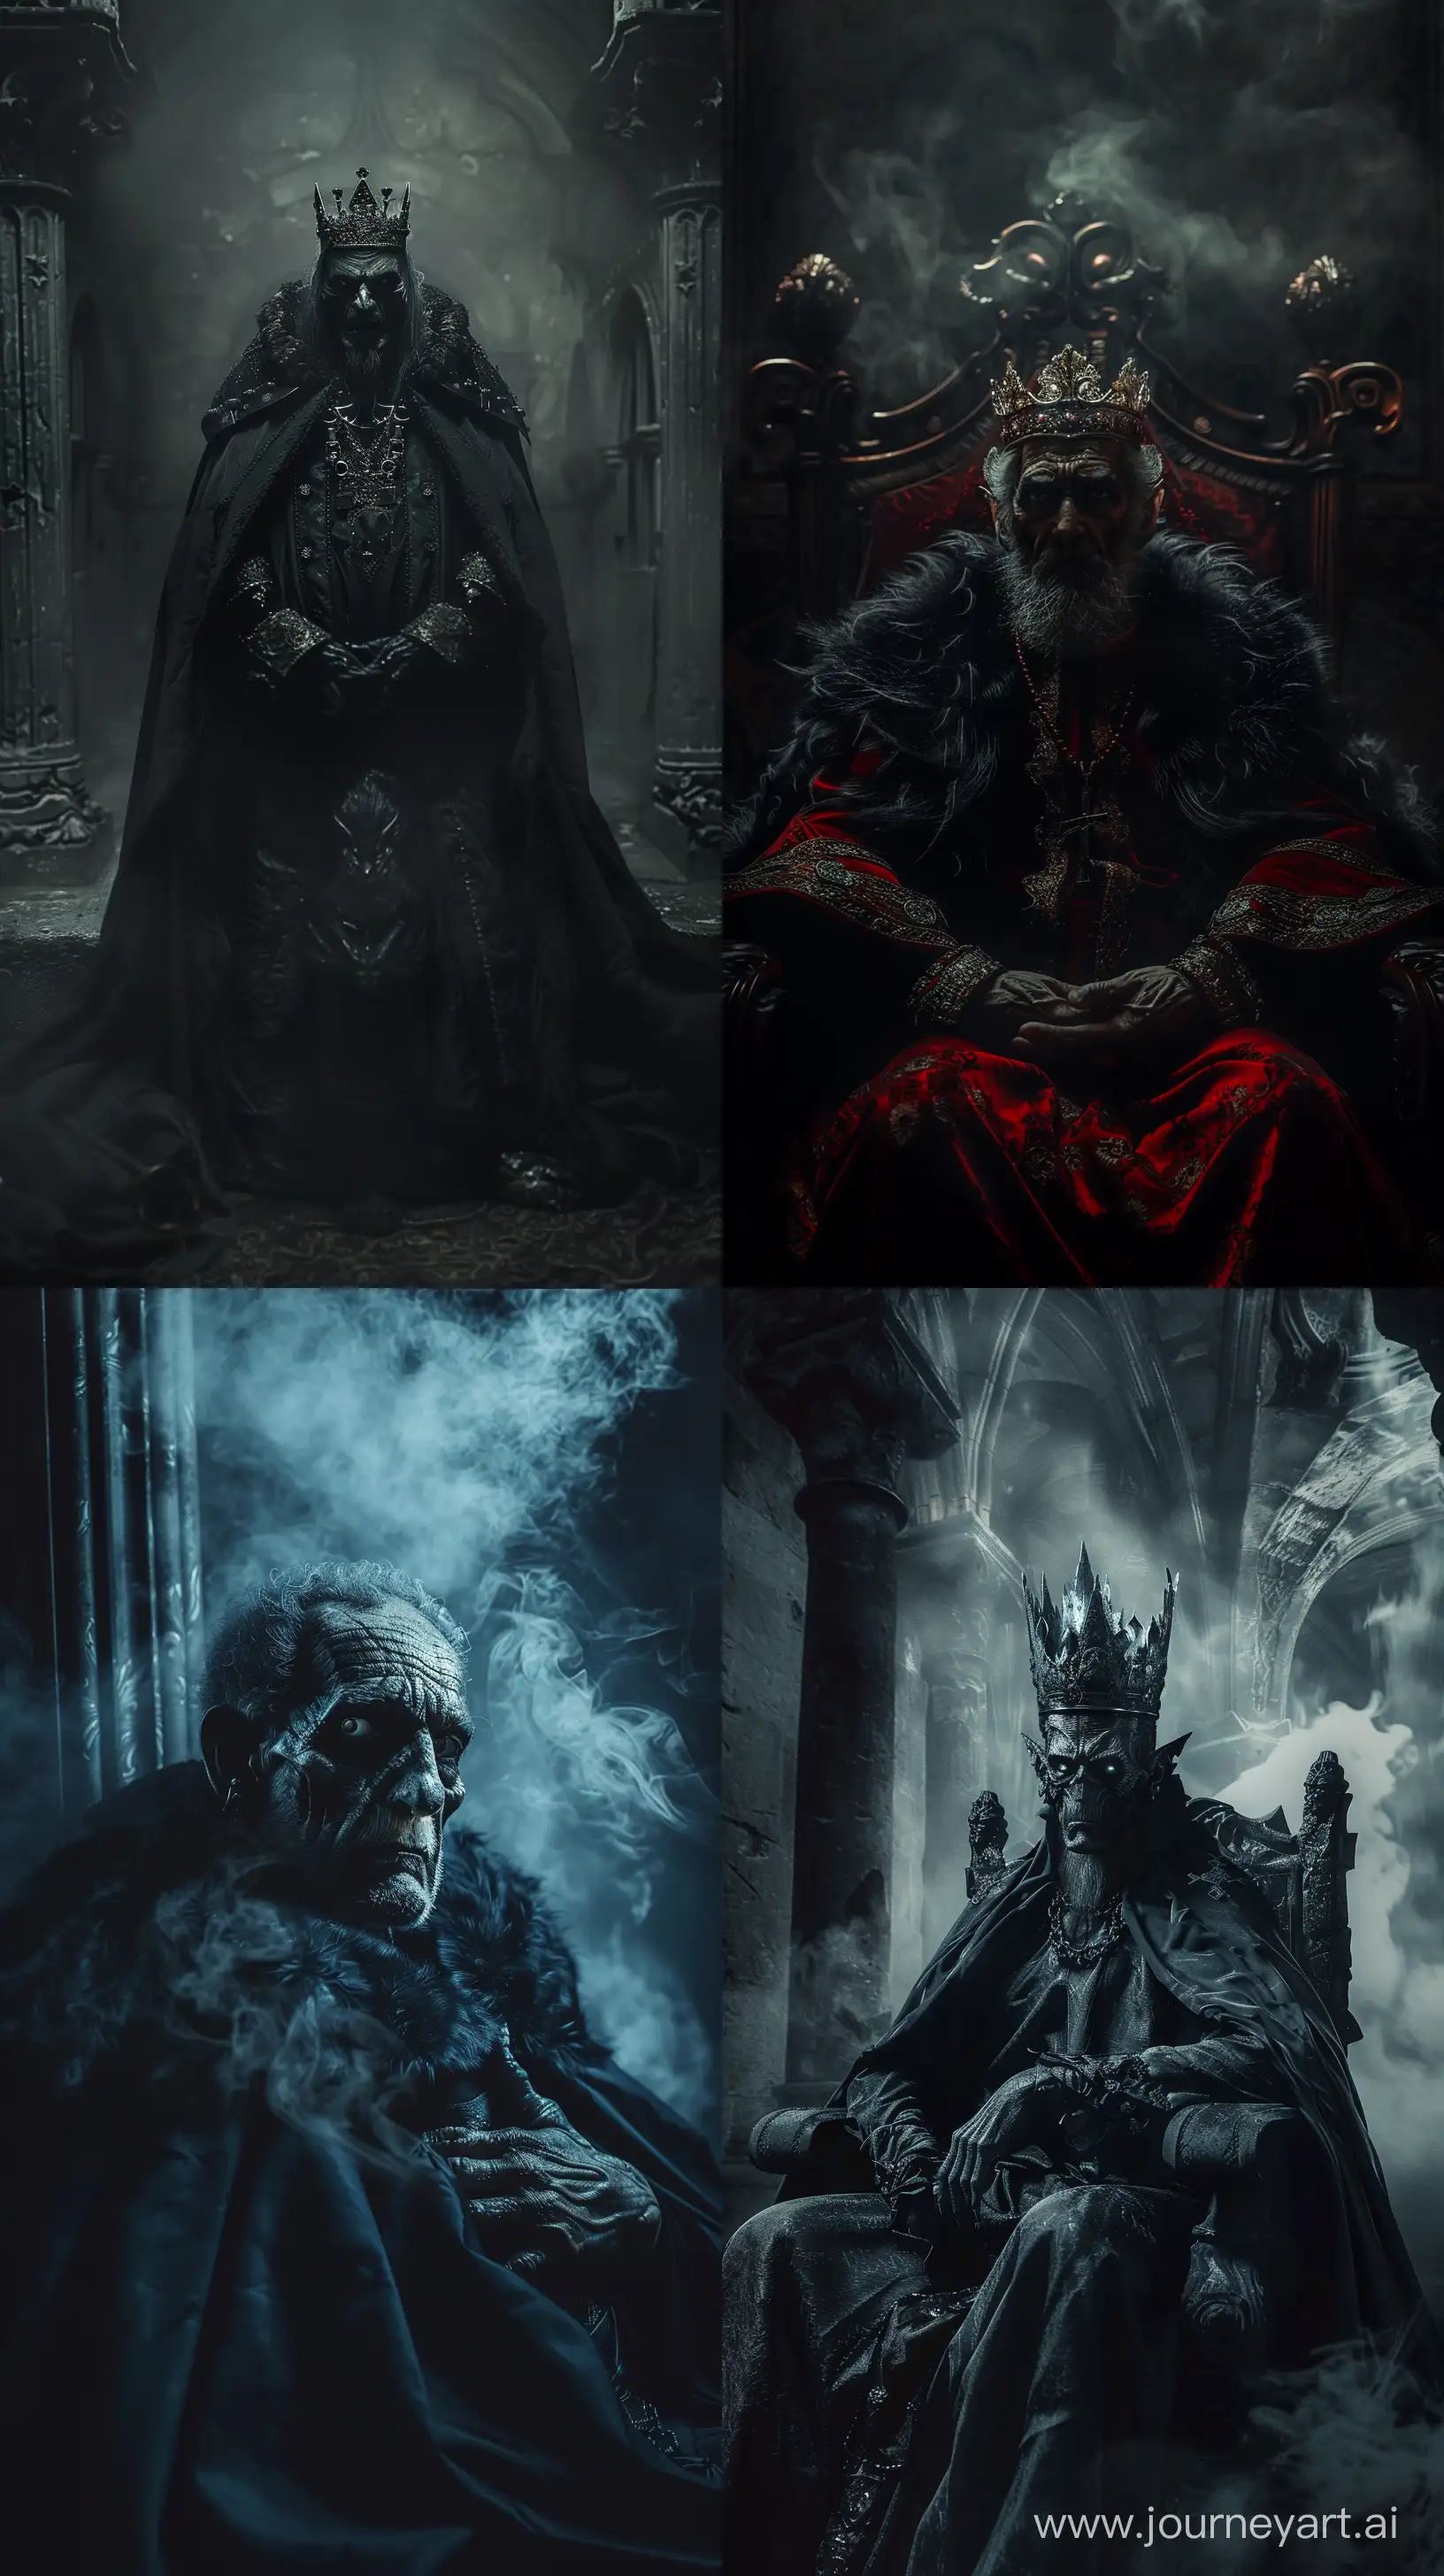 Majestic-Ancient-Vampire-King-in-Moody-BeksiskiInspired-Portrait